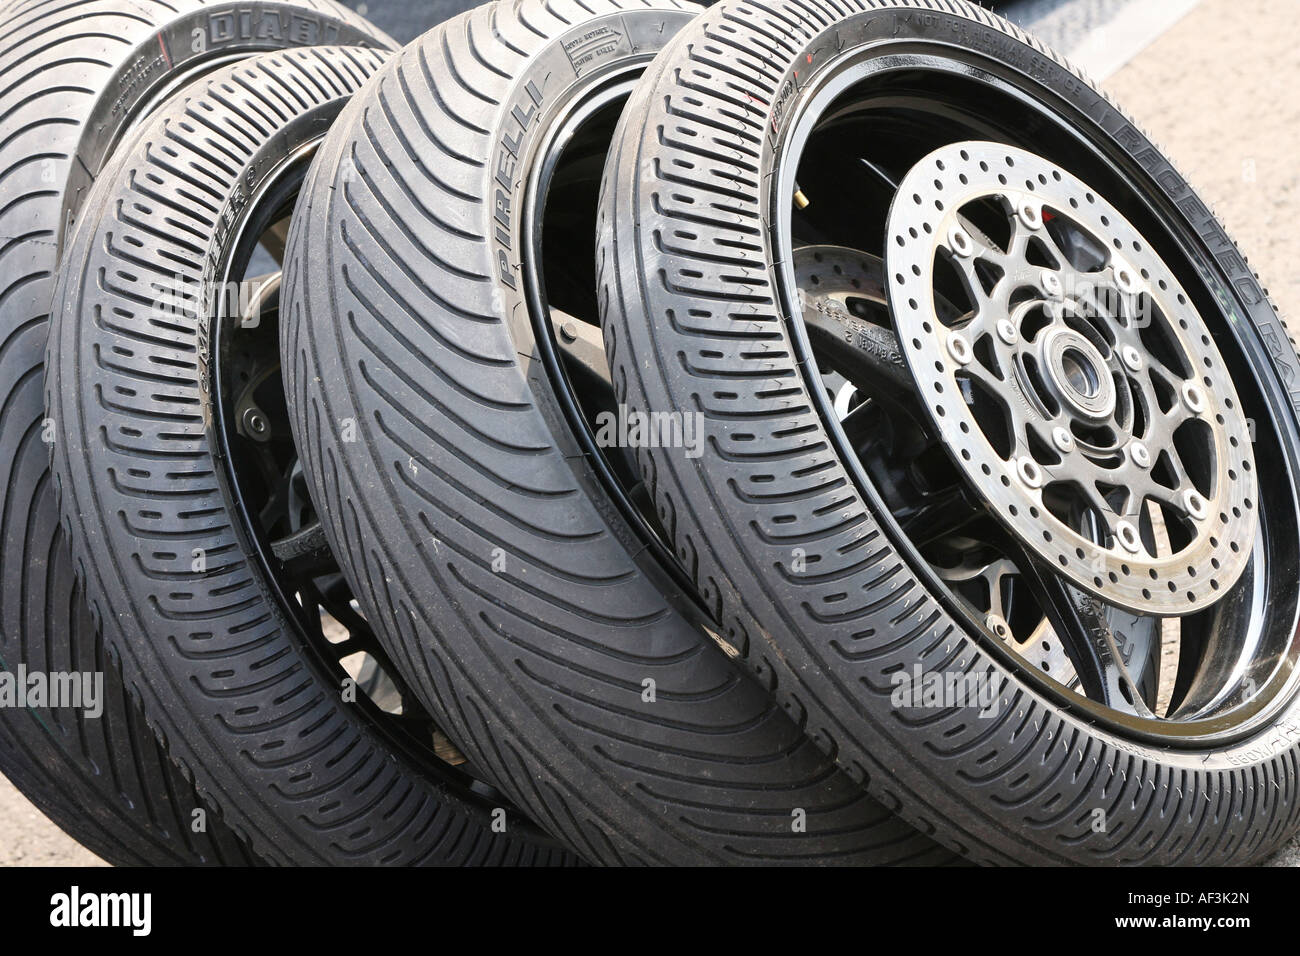 Pirelli Motorbike tyres SBK World Superbike Championship Stock Photo - Alamy